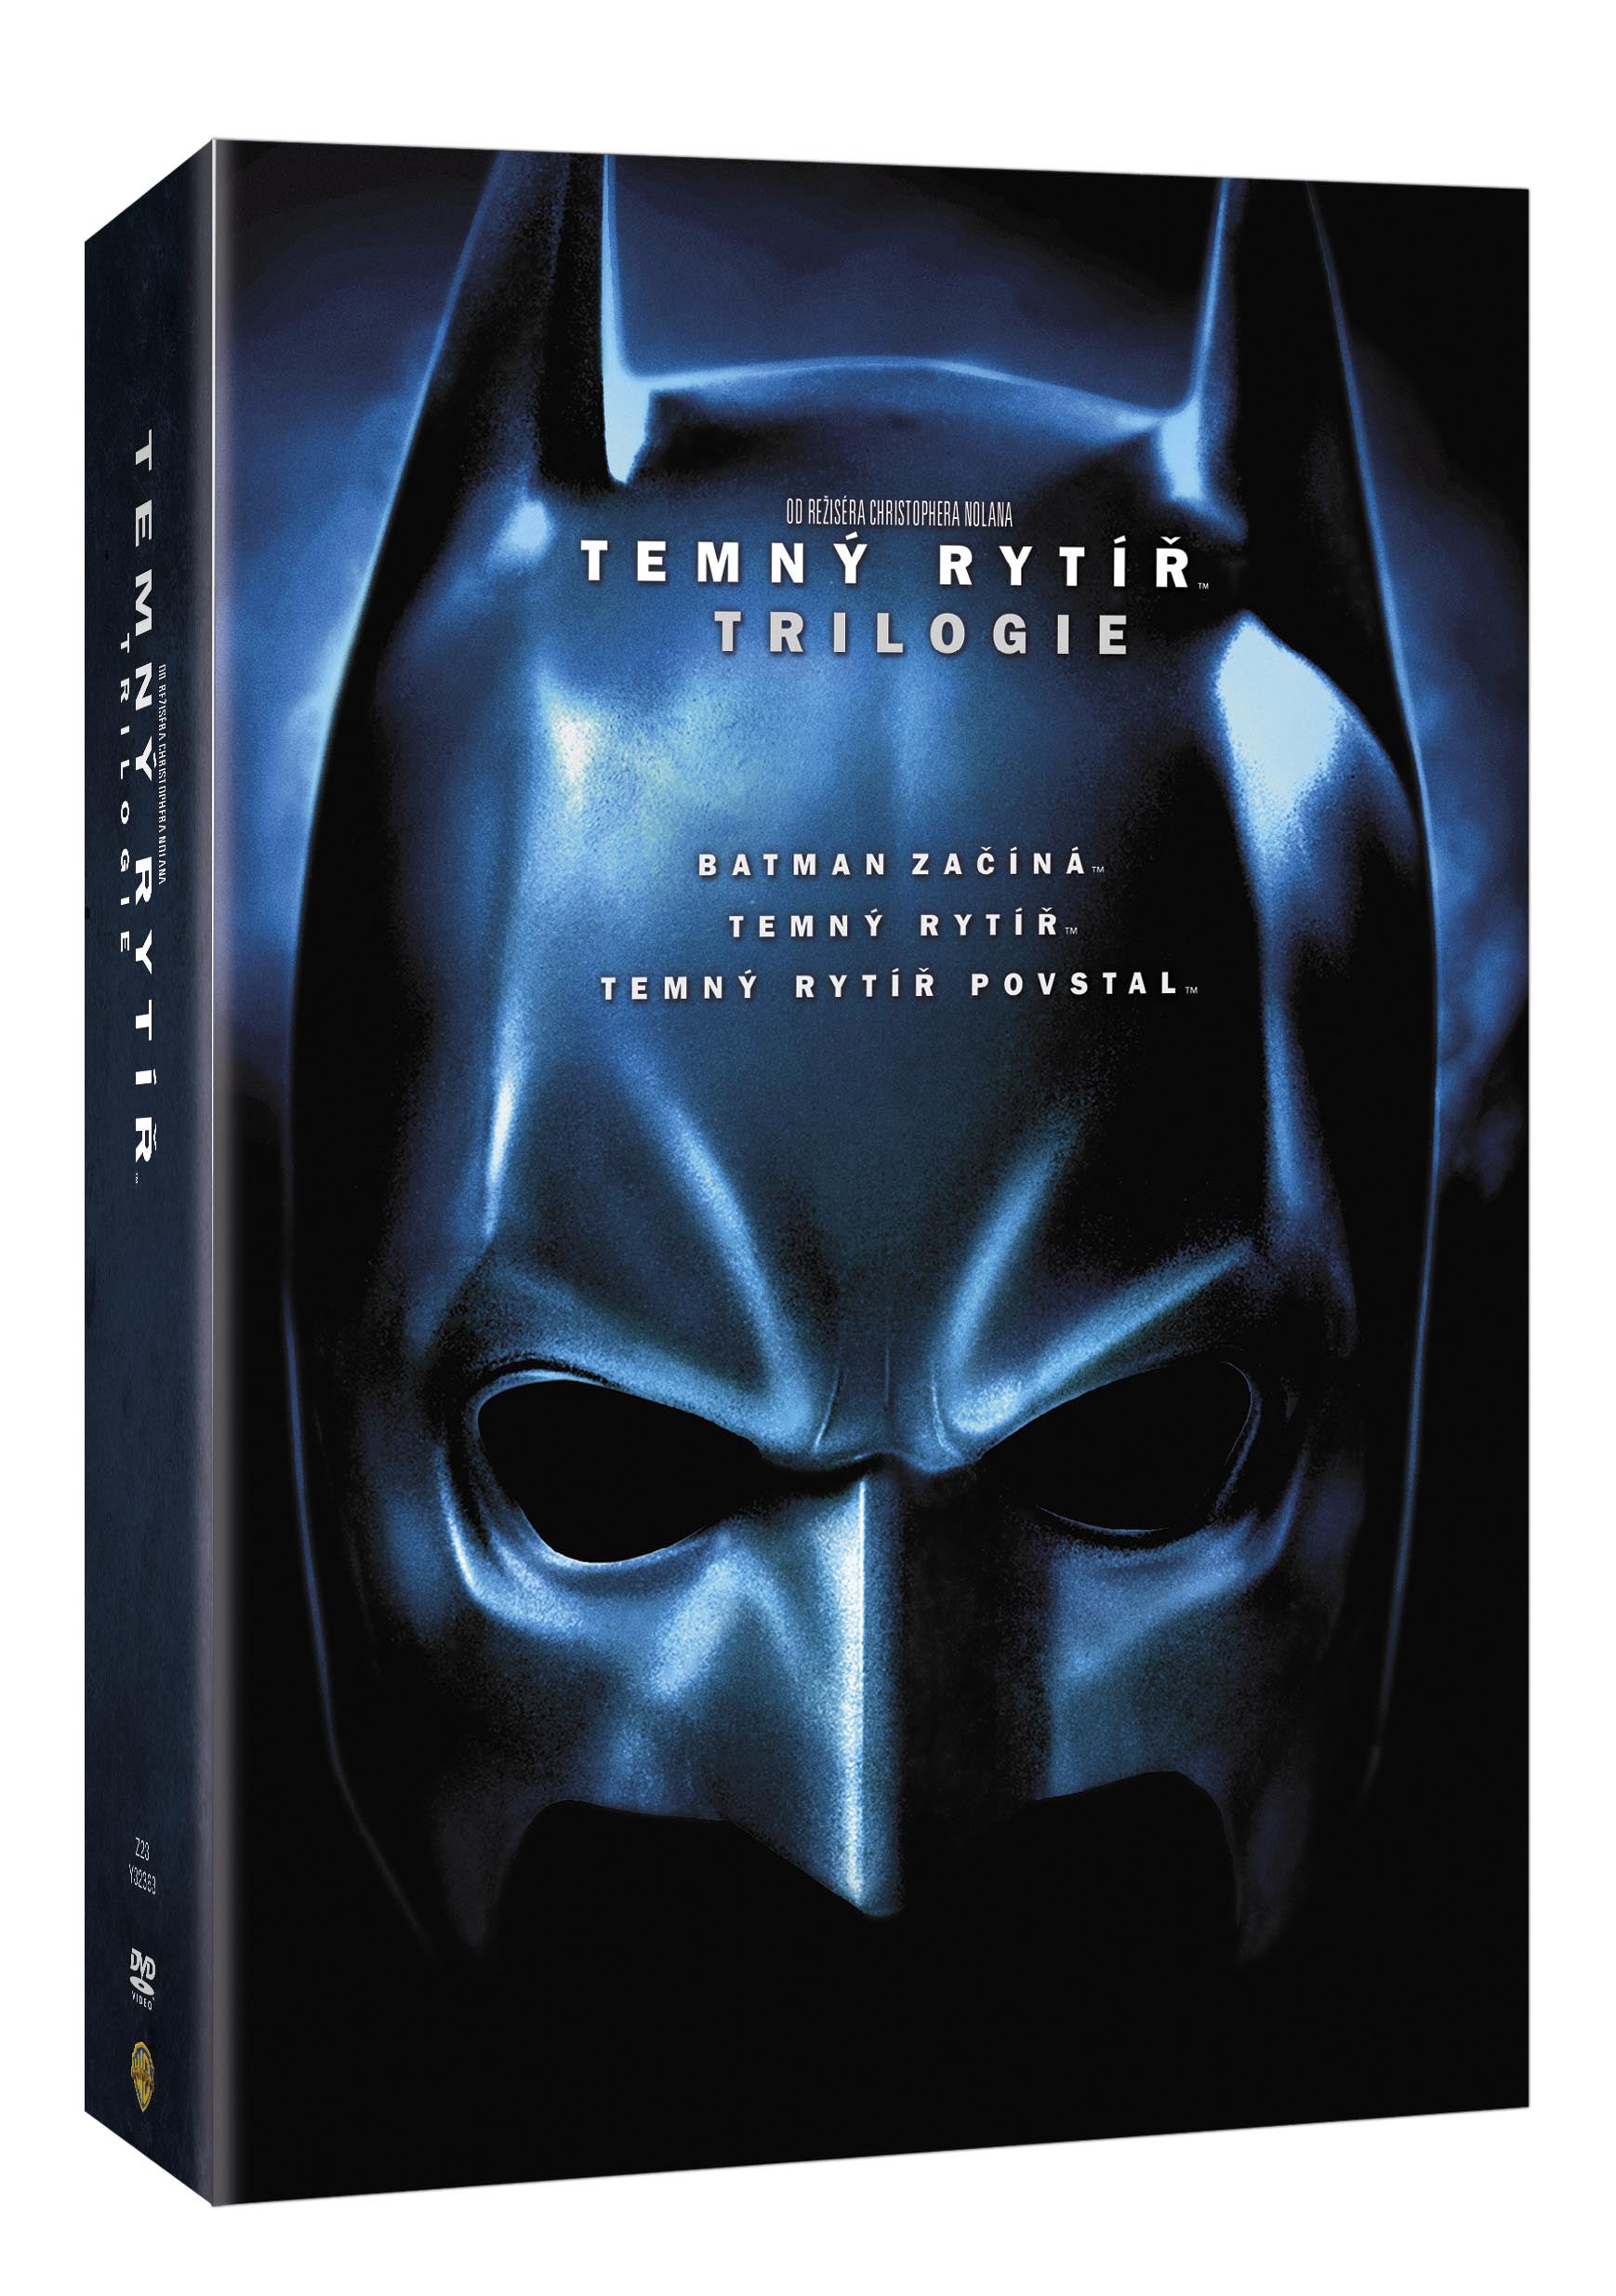 Temny rytir trilogie 6DVD / Dark Knight Trilogy 6DVD